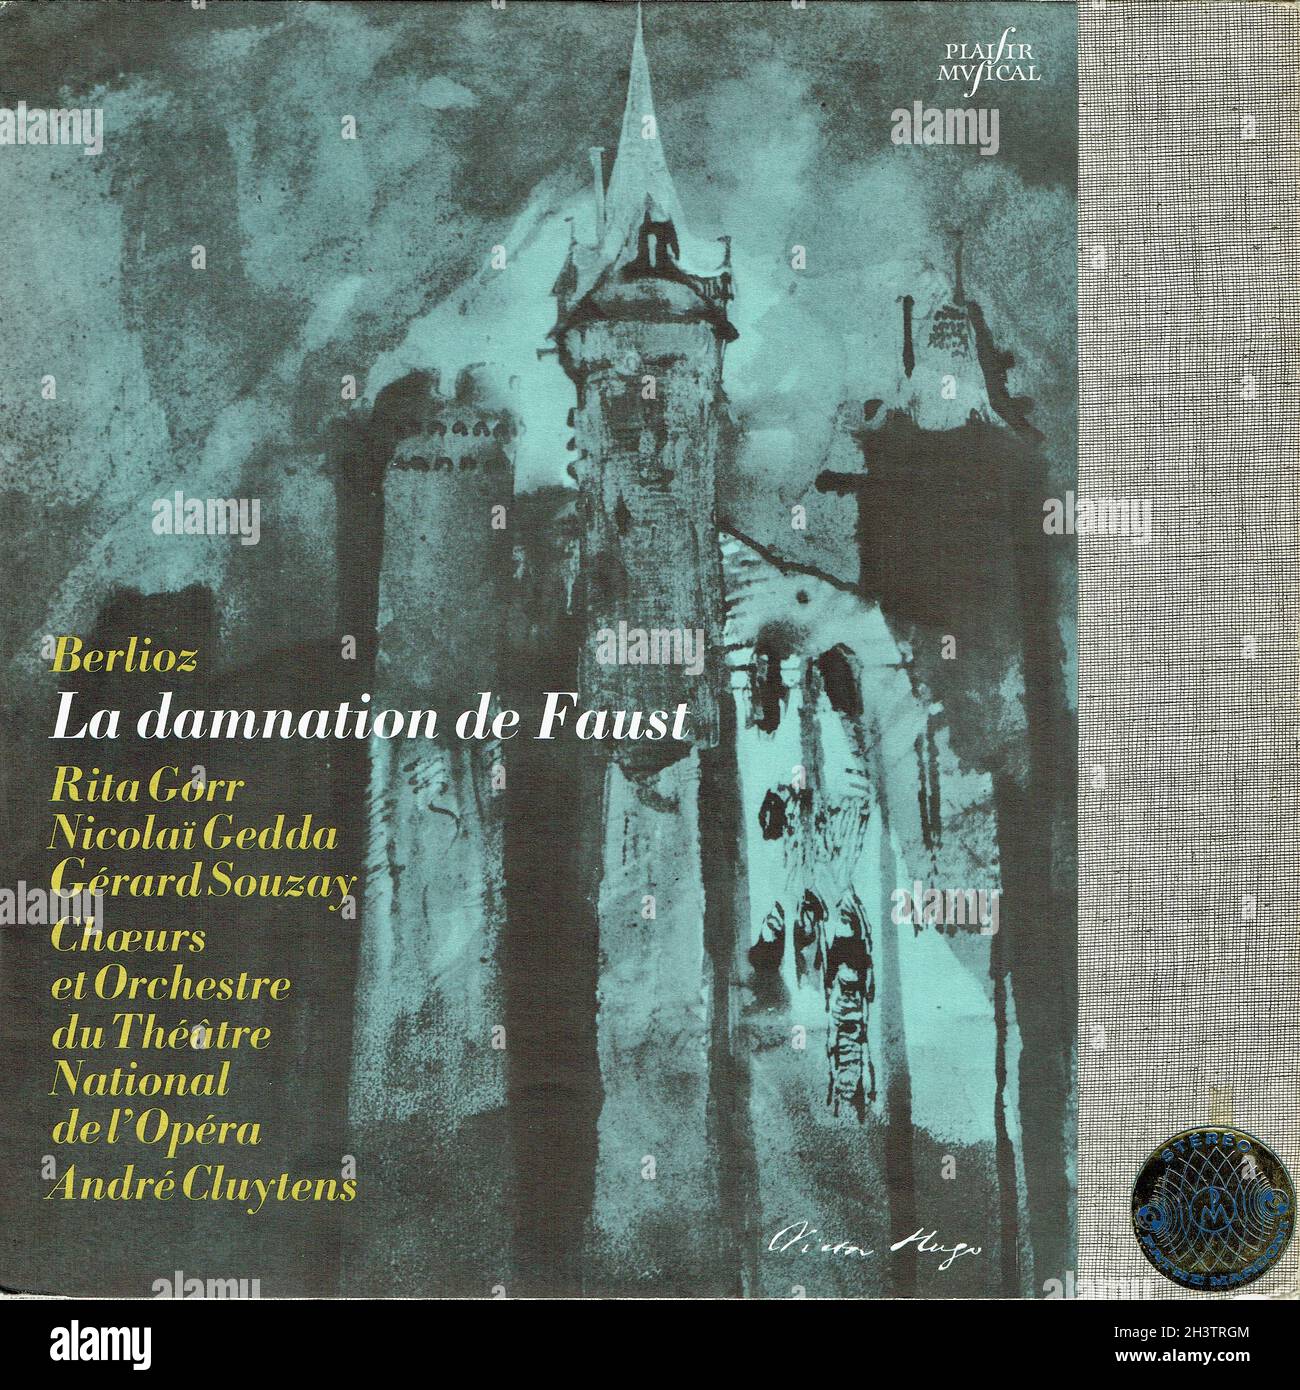 Berlioz La damnation de Faust - Gorr Gedda Cluytens EMI 1 - Classical Music Vintage Vinyl Record Stock Photo